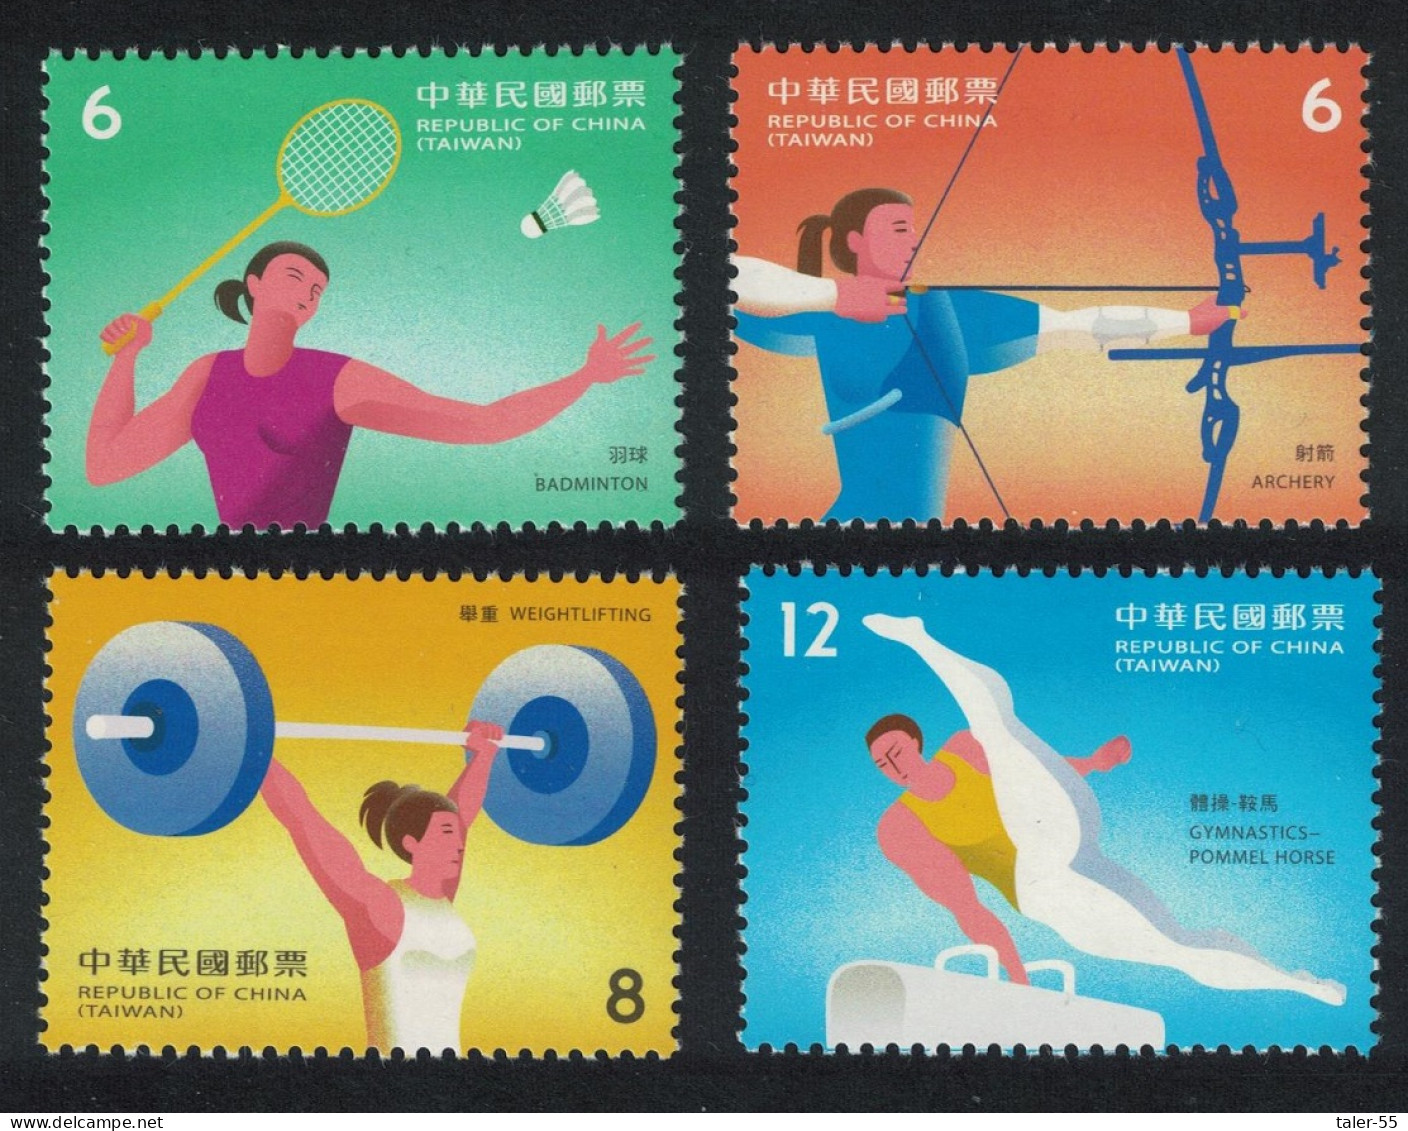 Taiwan Badminton Archery Weightlifting Sports 4v 2020 MNH - Neufs